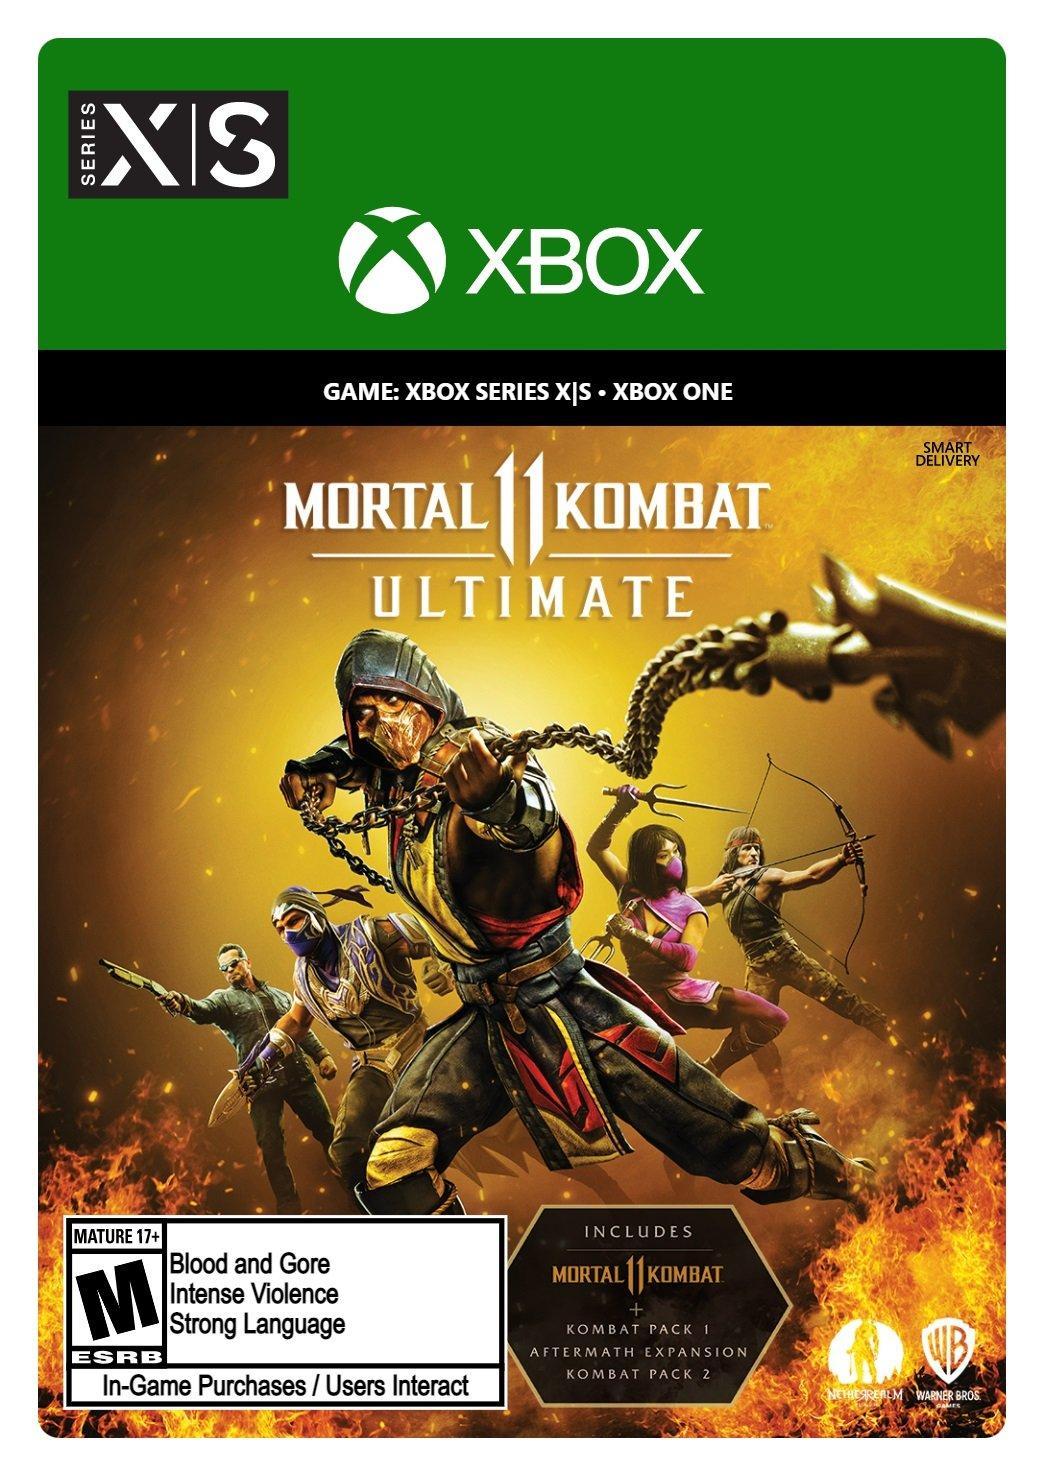 Mortal Kombat 11 - PS4 | PlayStation 4 | GameStop